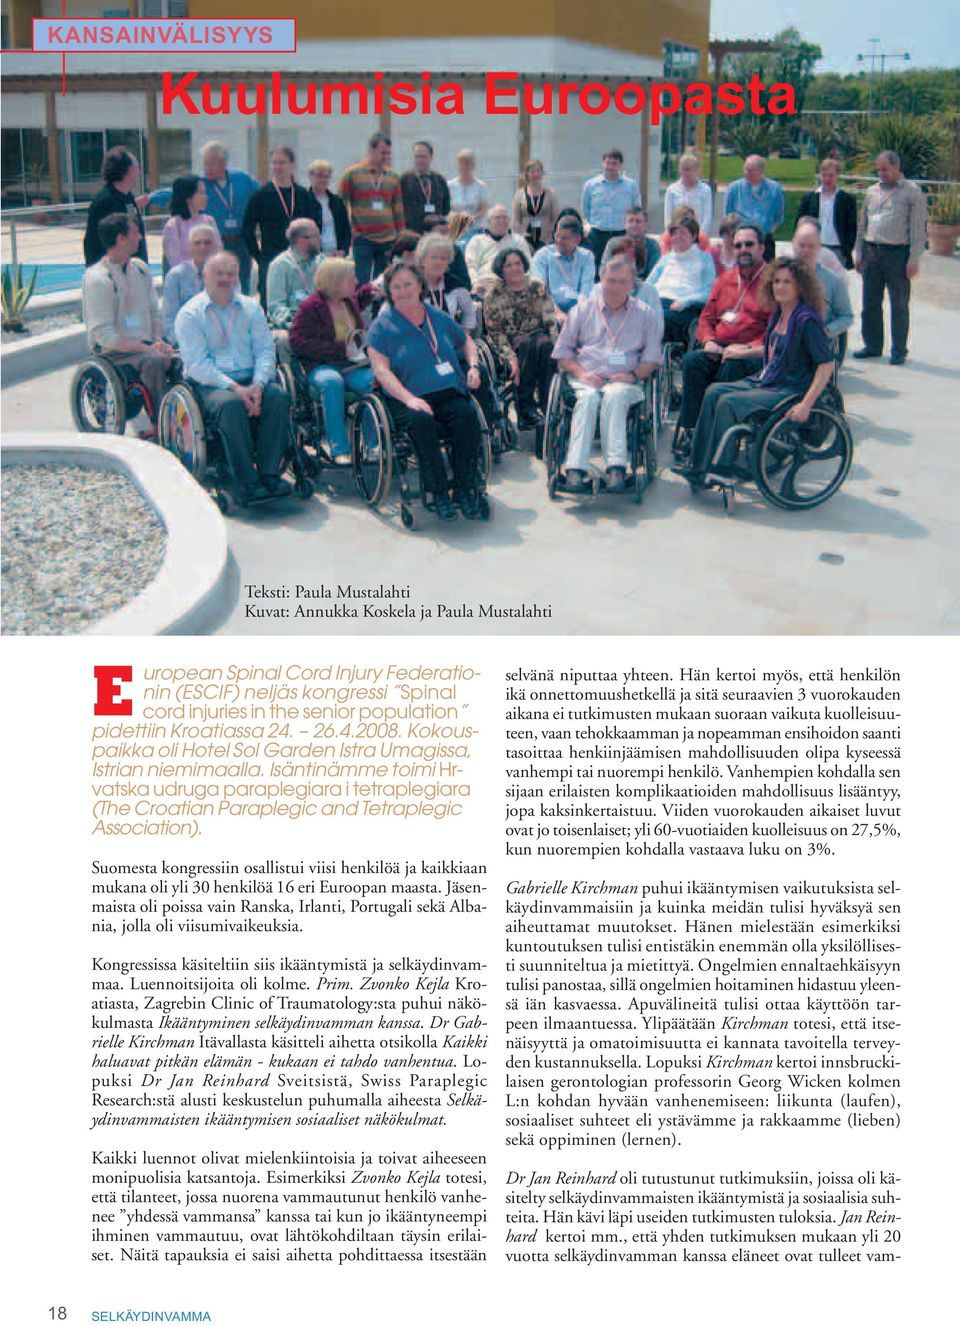 Isäntinämme toimi Hrvatska udruga paraplegiara i tetraplegiara (The Croatian Paraplegic and Tetraplegic Association).